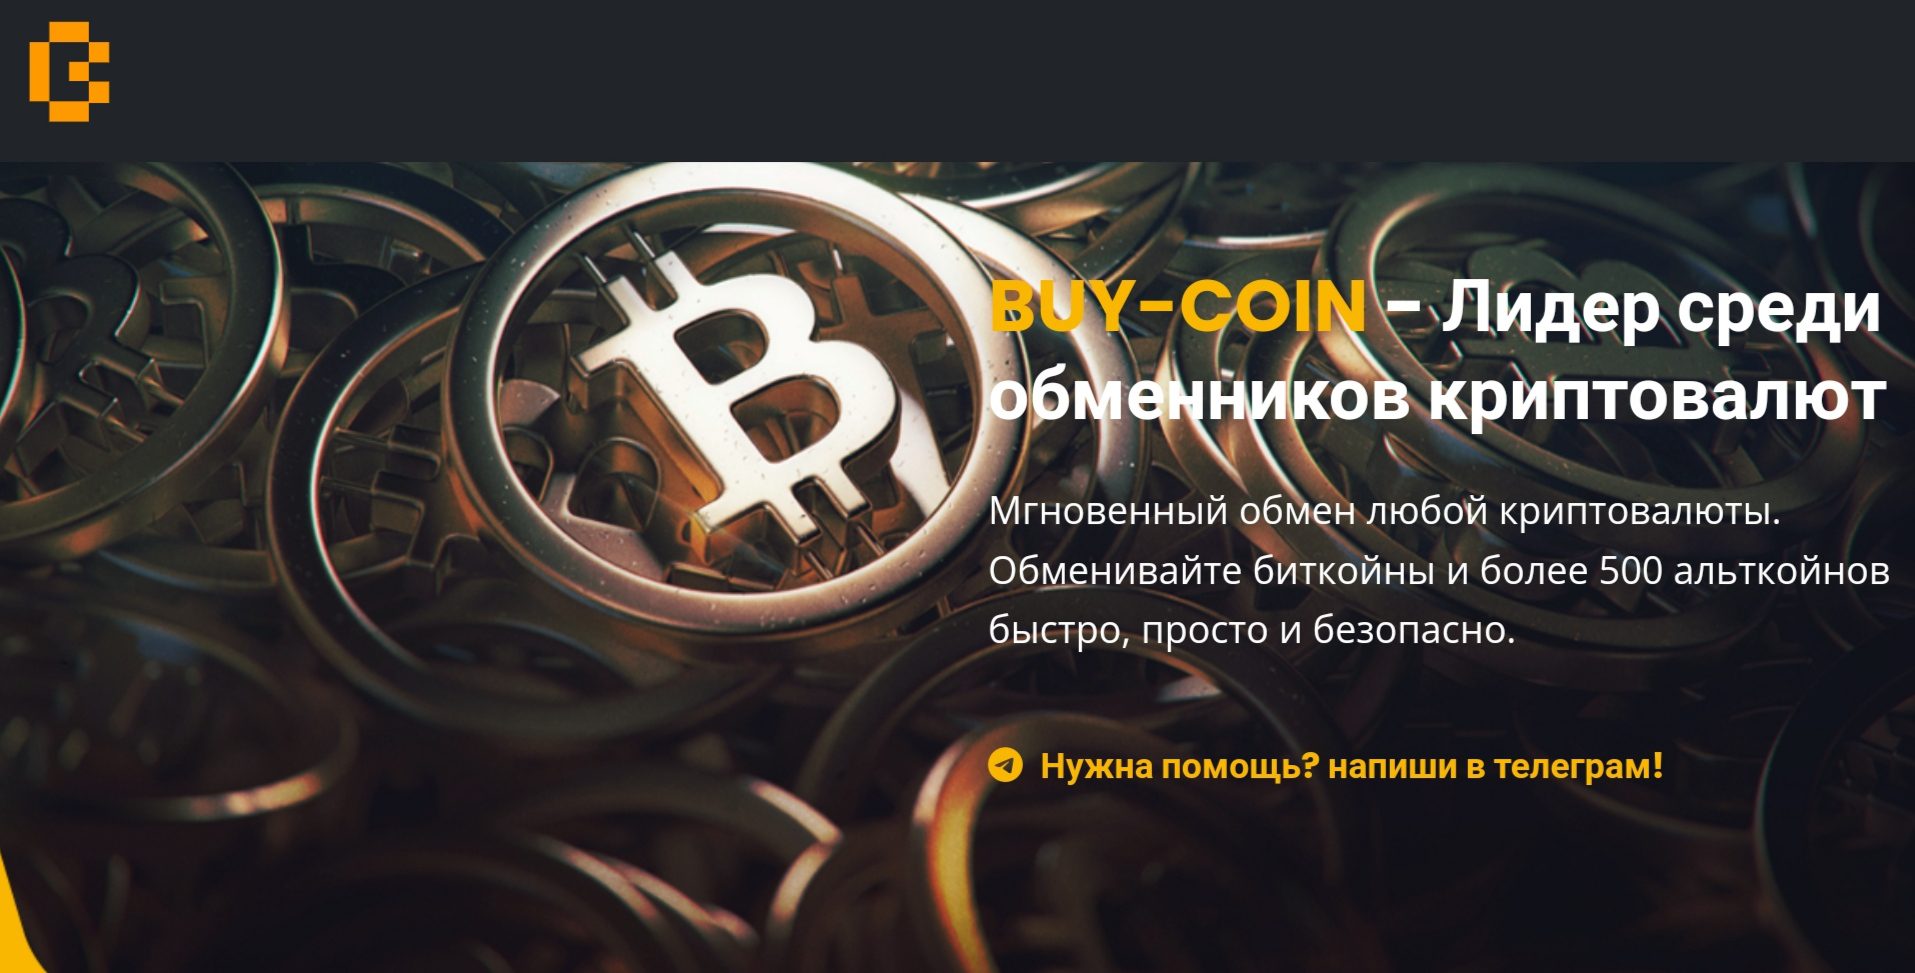 Buy-coin.ru сайт